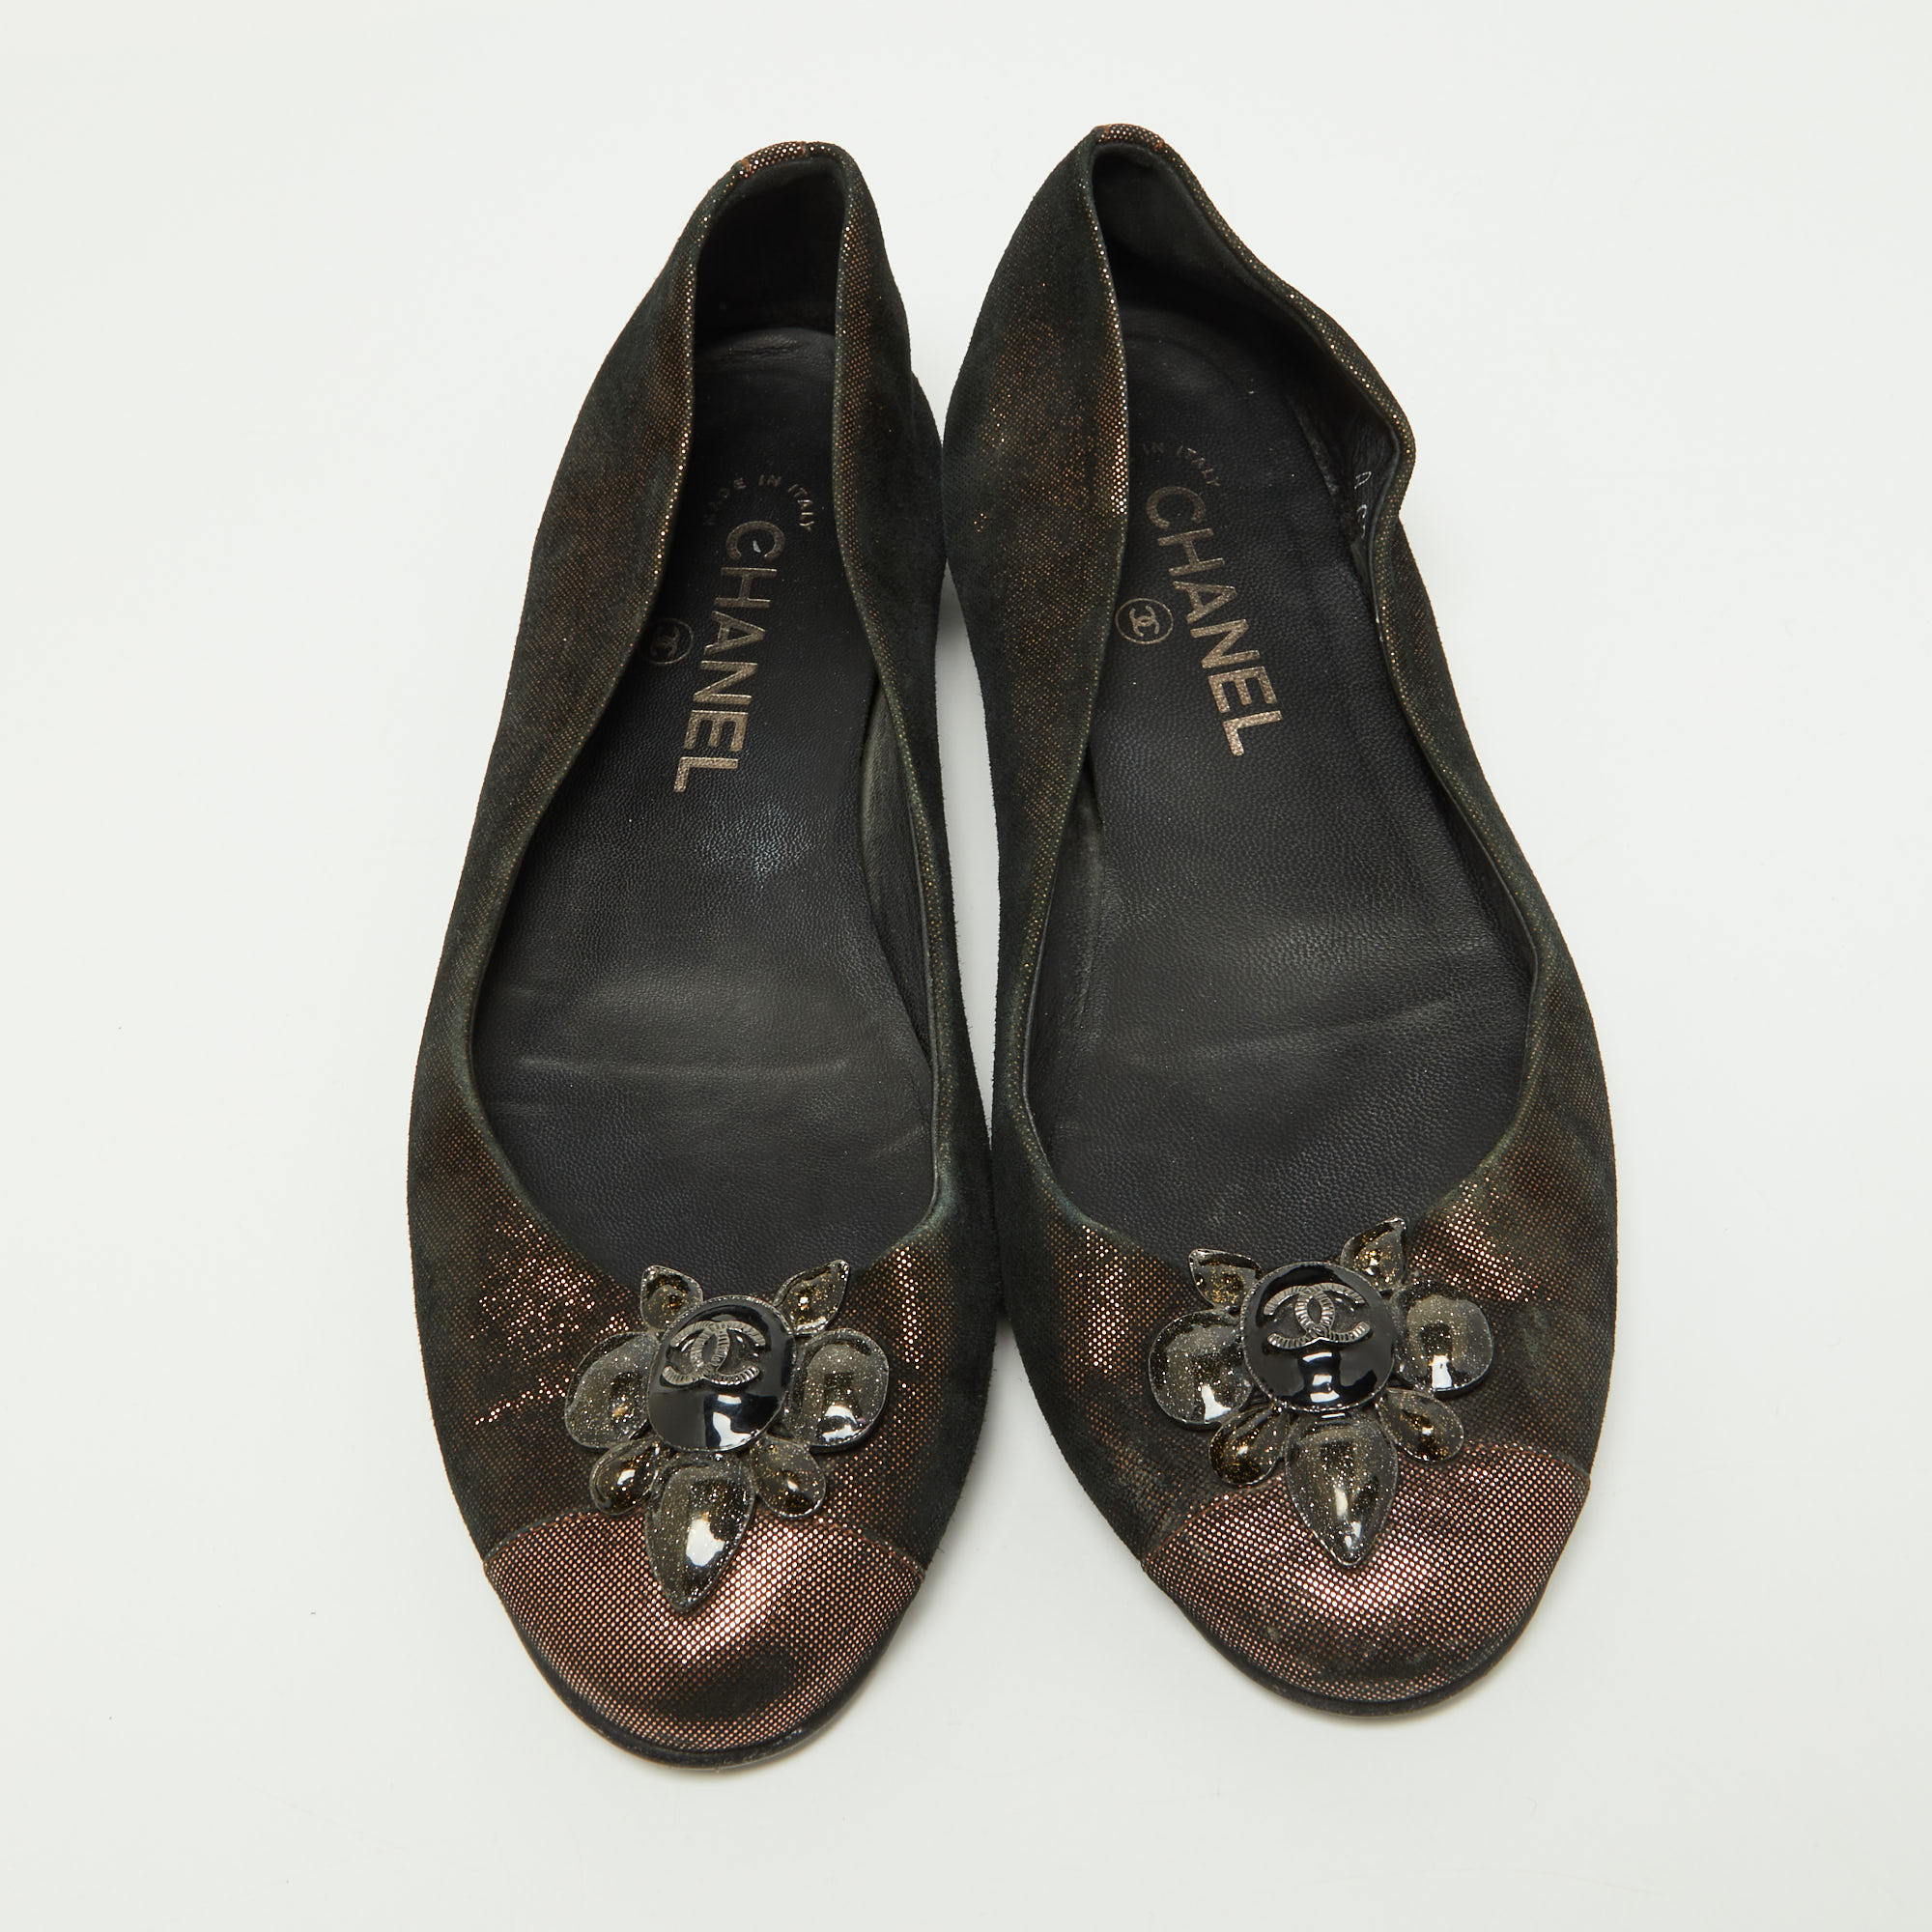 Chanel Metallic Iridescent Suede Embellished Ballet Flats Size 38.5